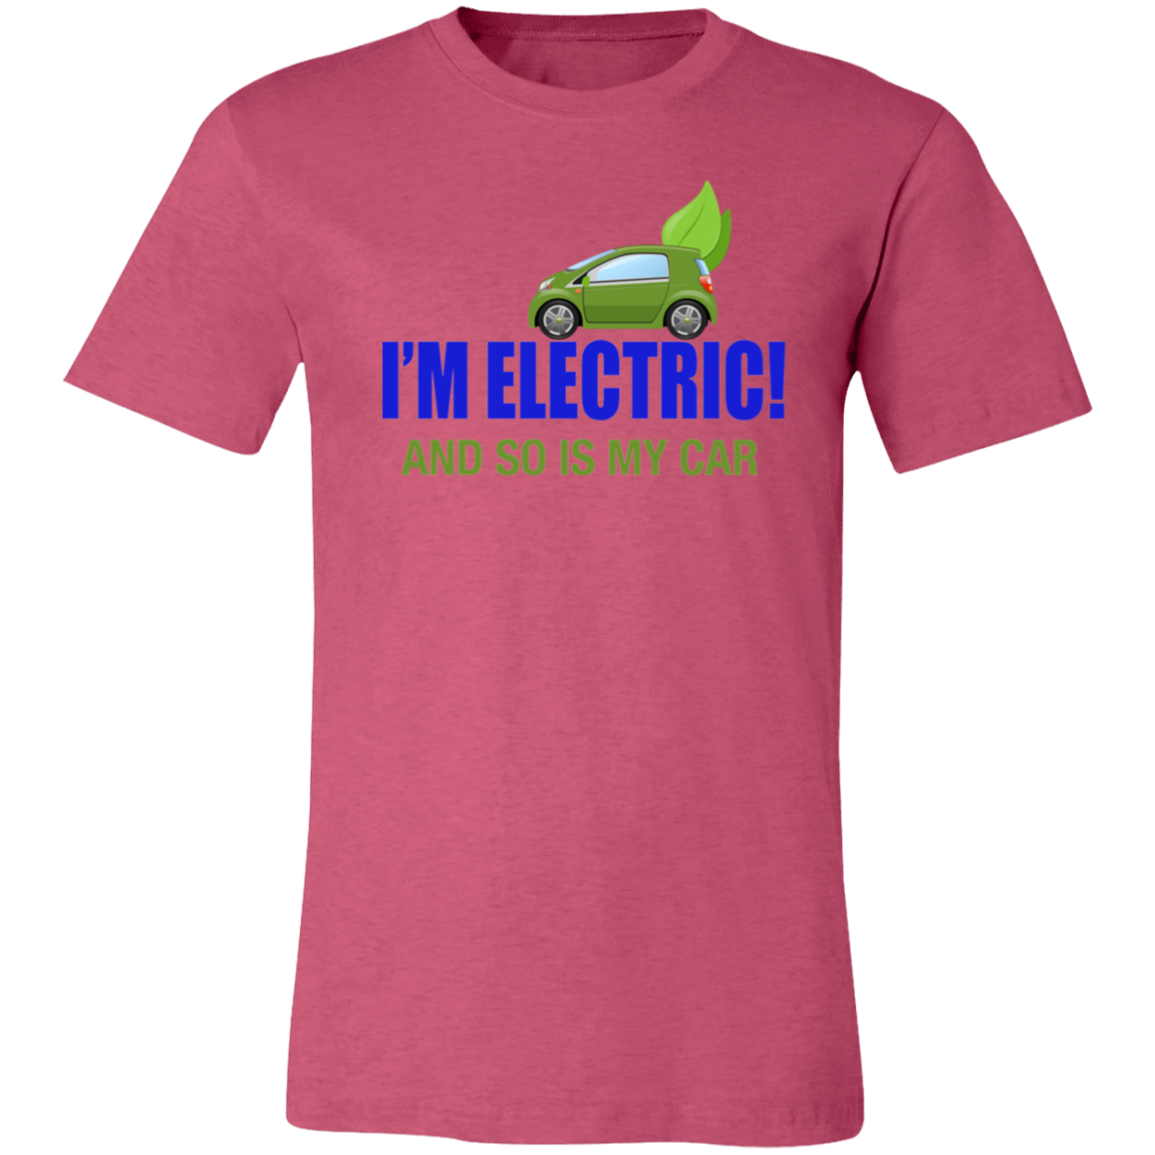 I'm Electric Short-Sleeve T-Shirt